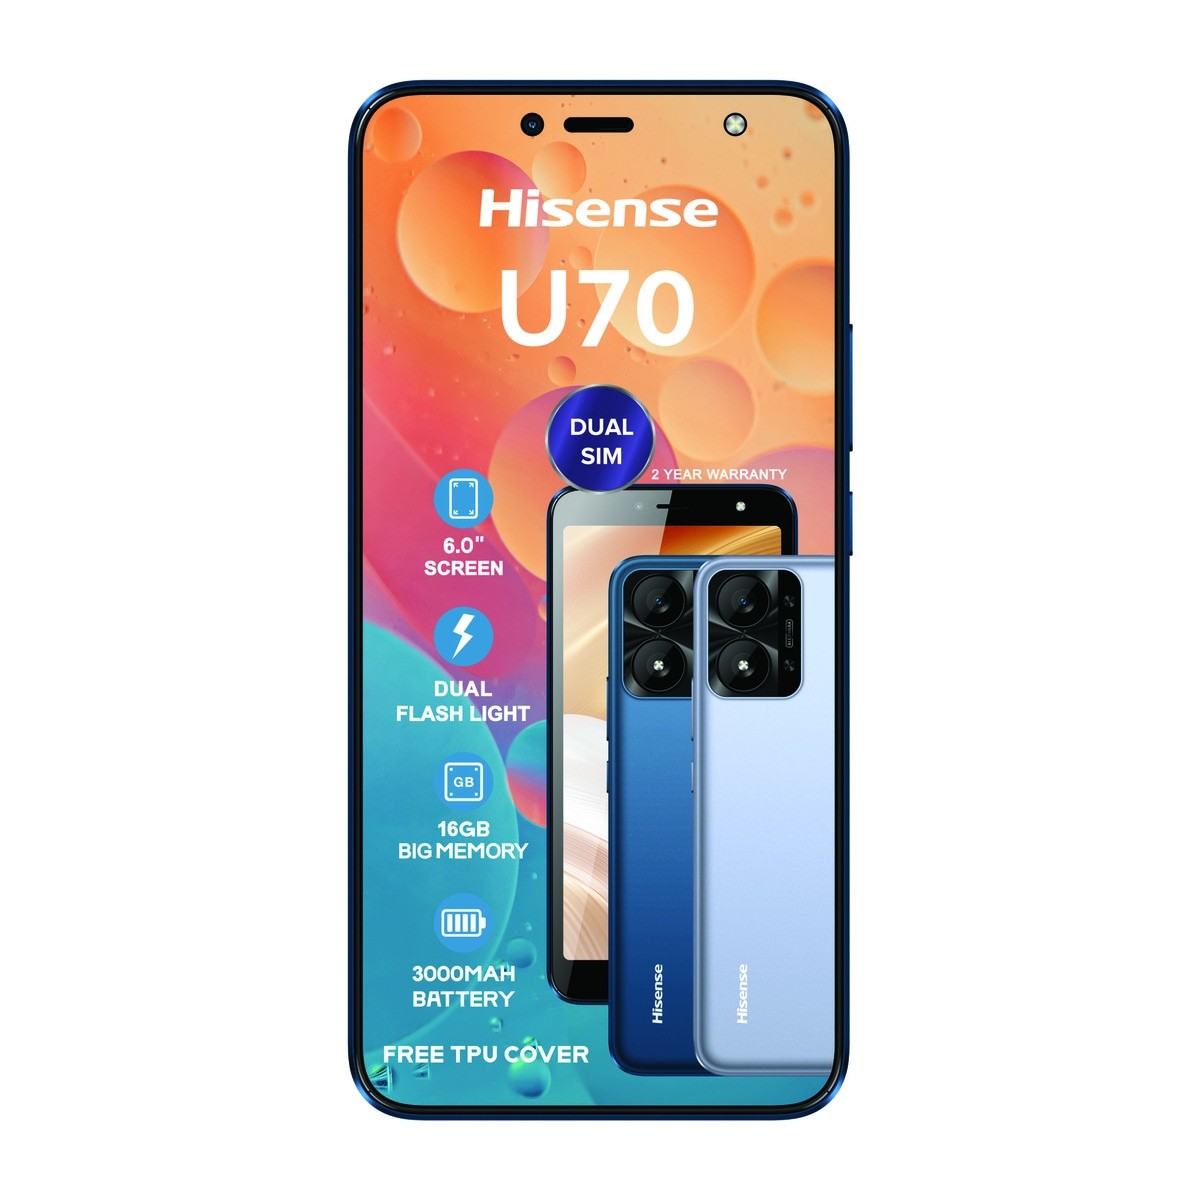 Hisense U70 (Vodacom)